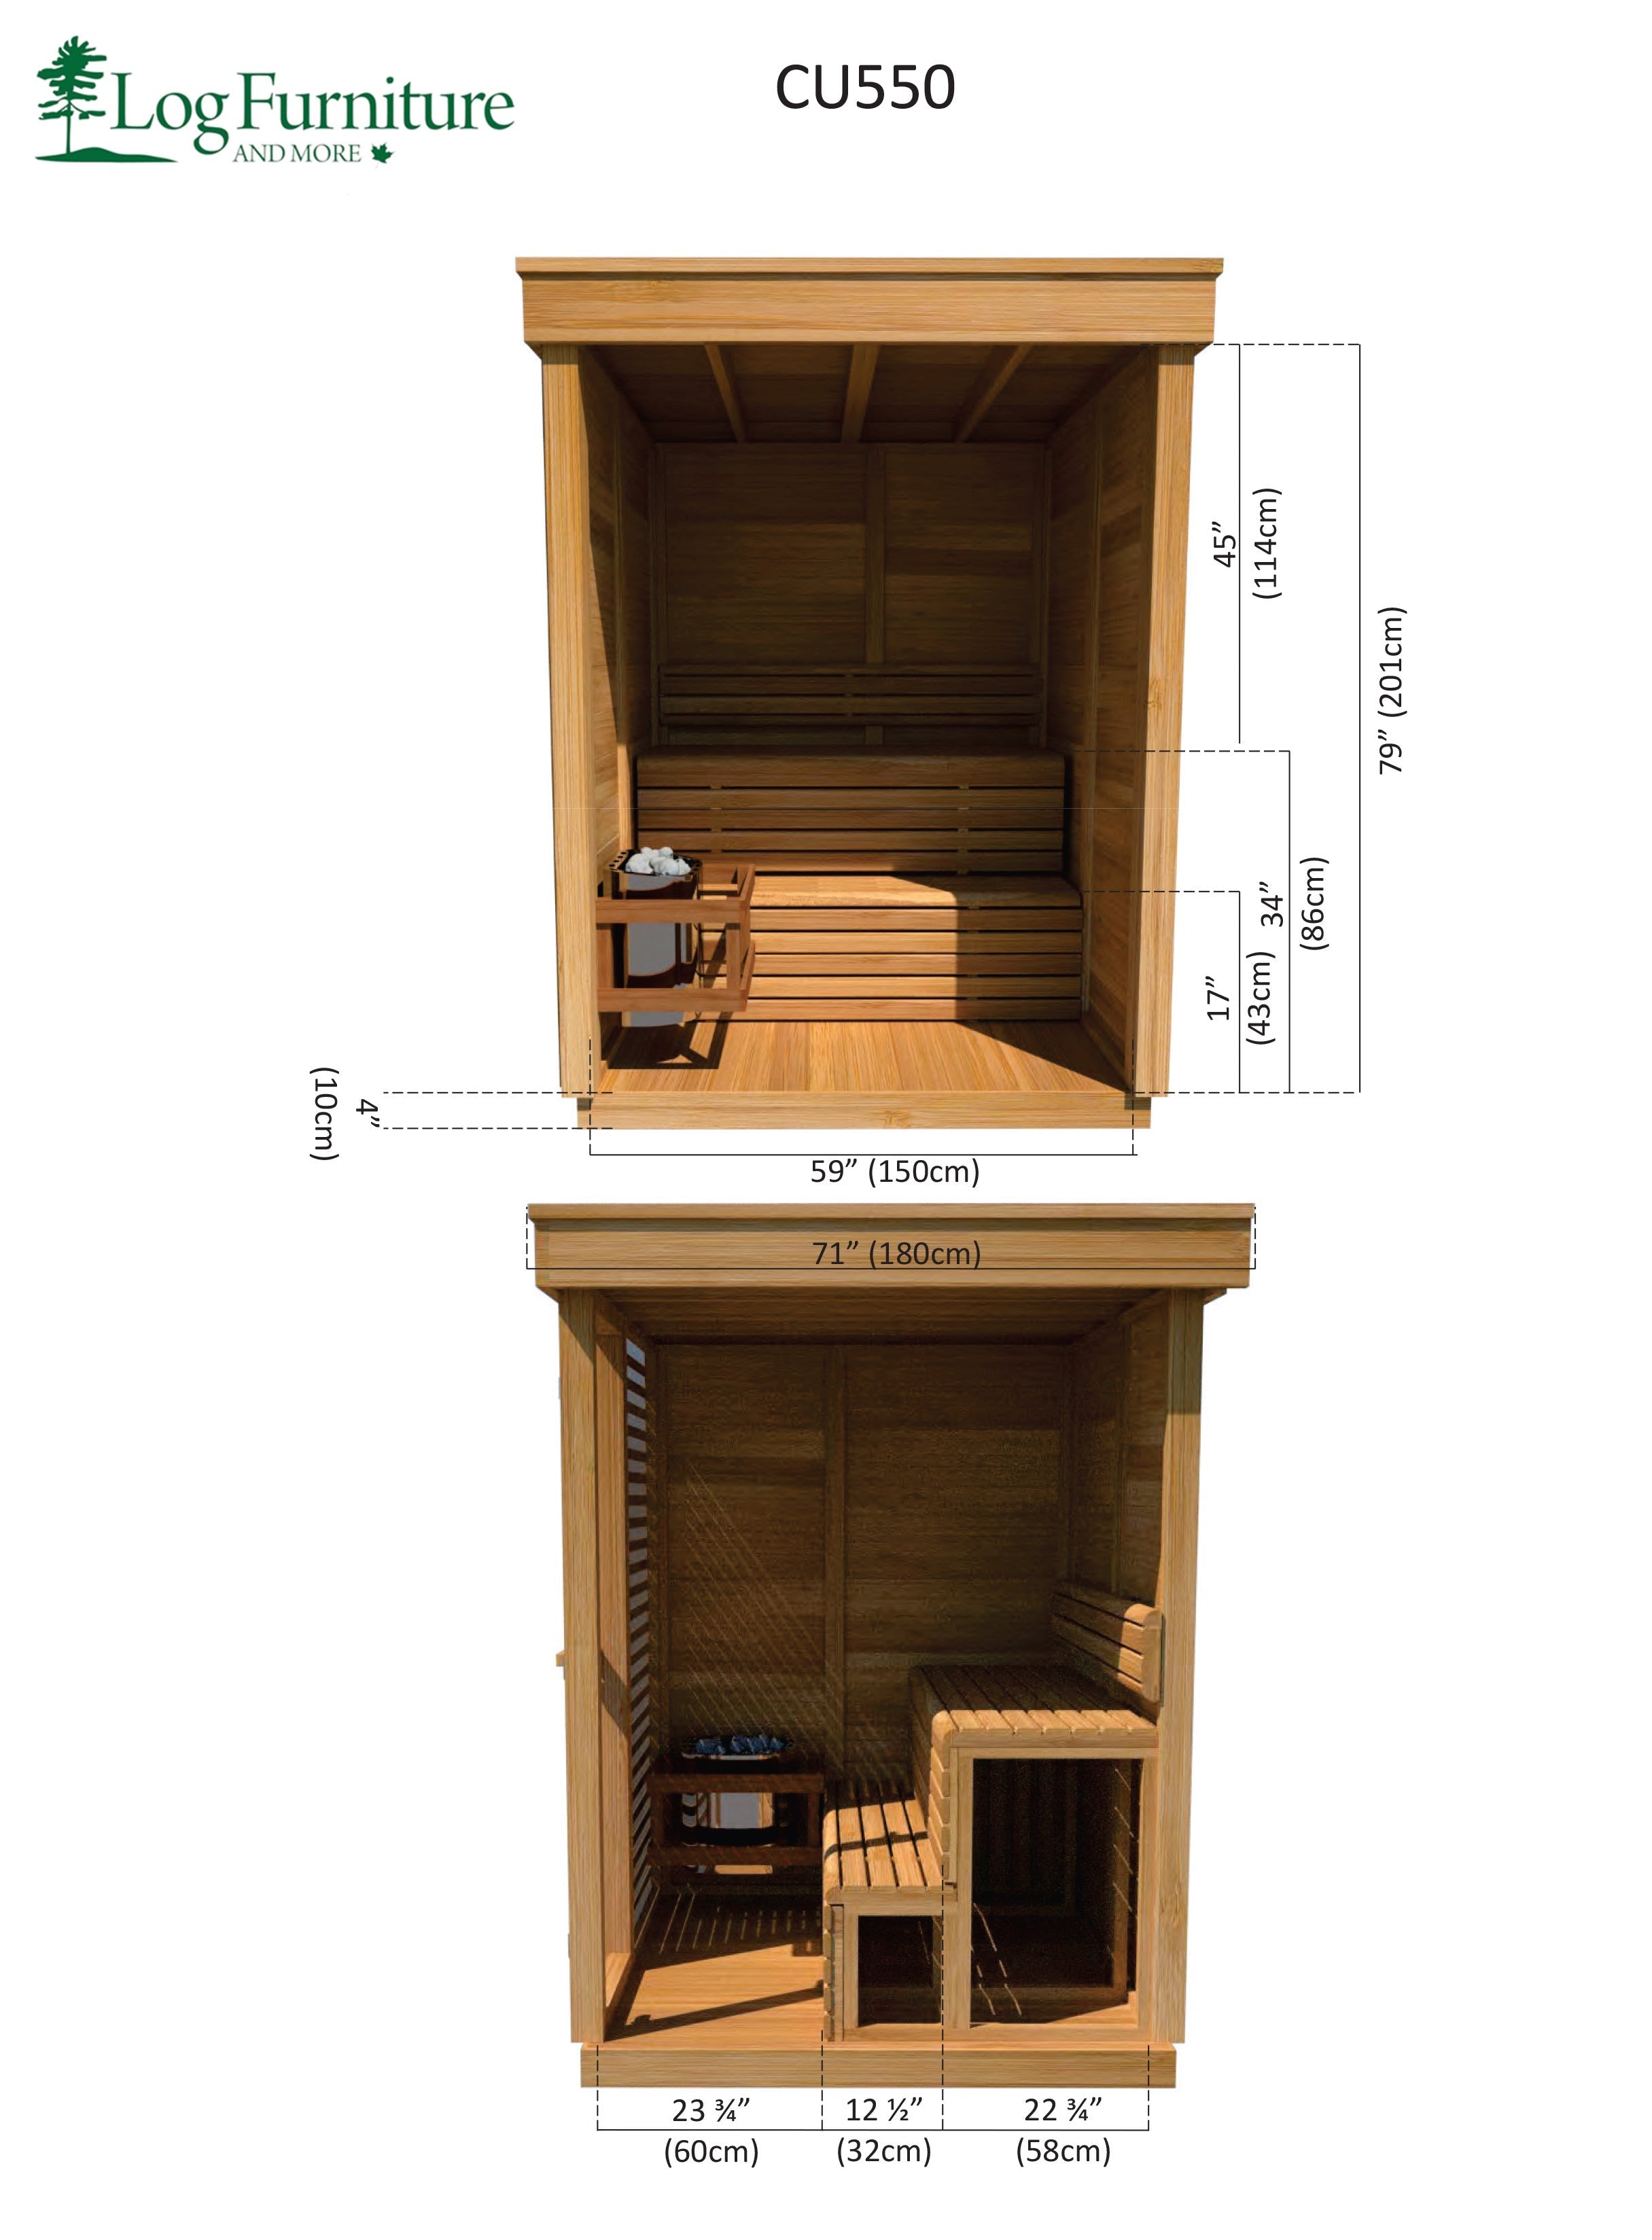 Dimensions of Knotty Cedar Modern Box OUTDOOR Sauna